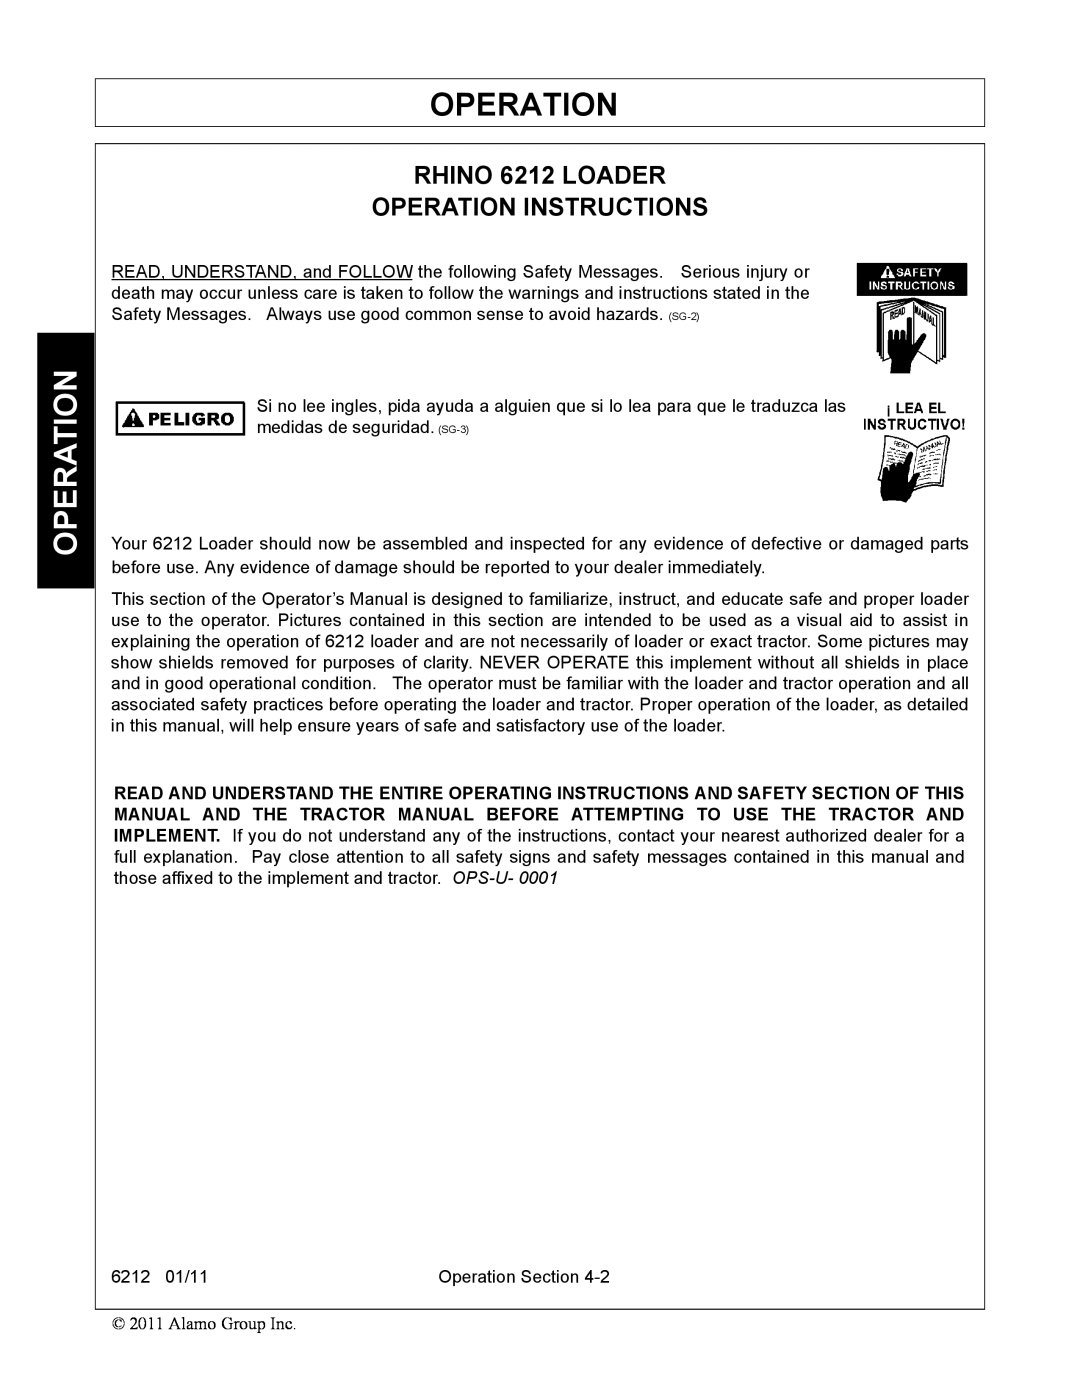 Alamo manual Operation, RHINO 6212 LOADER OPERATION INSTRUCTIONS 